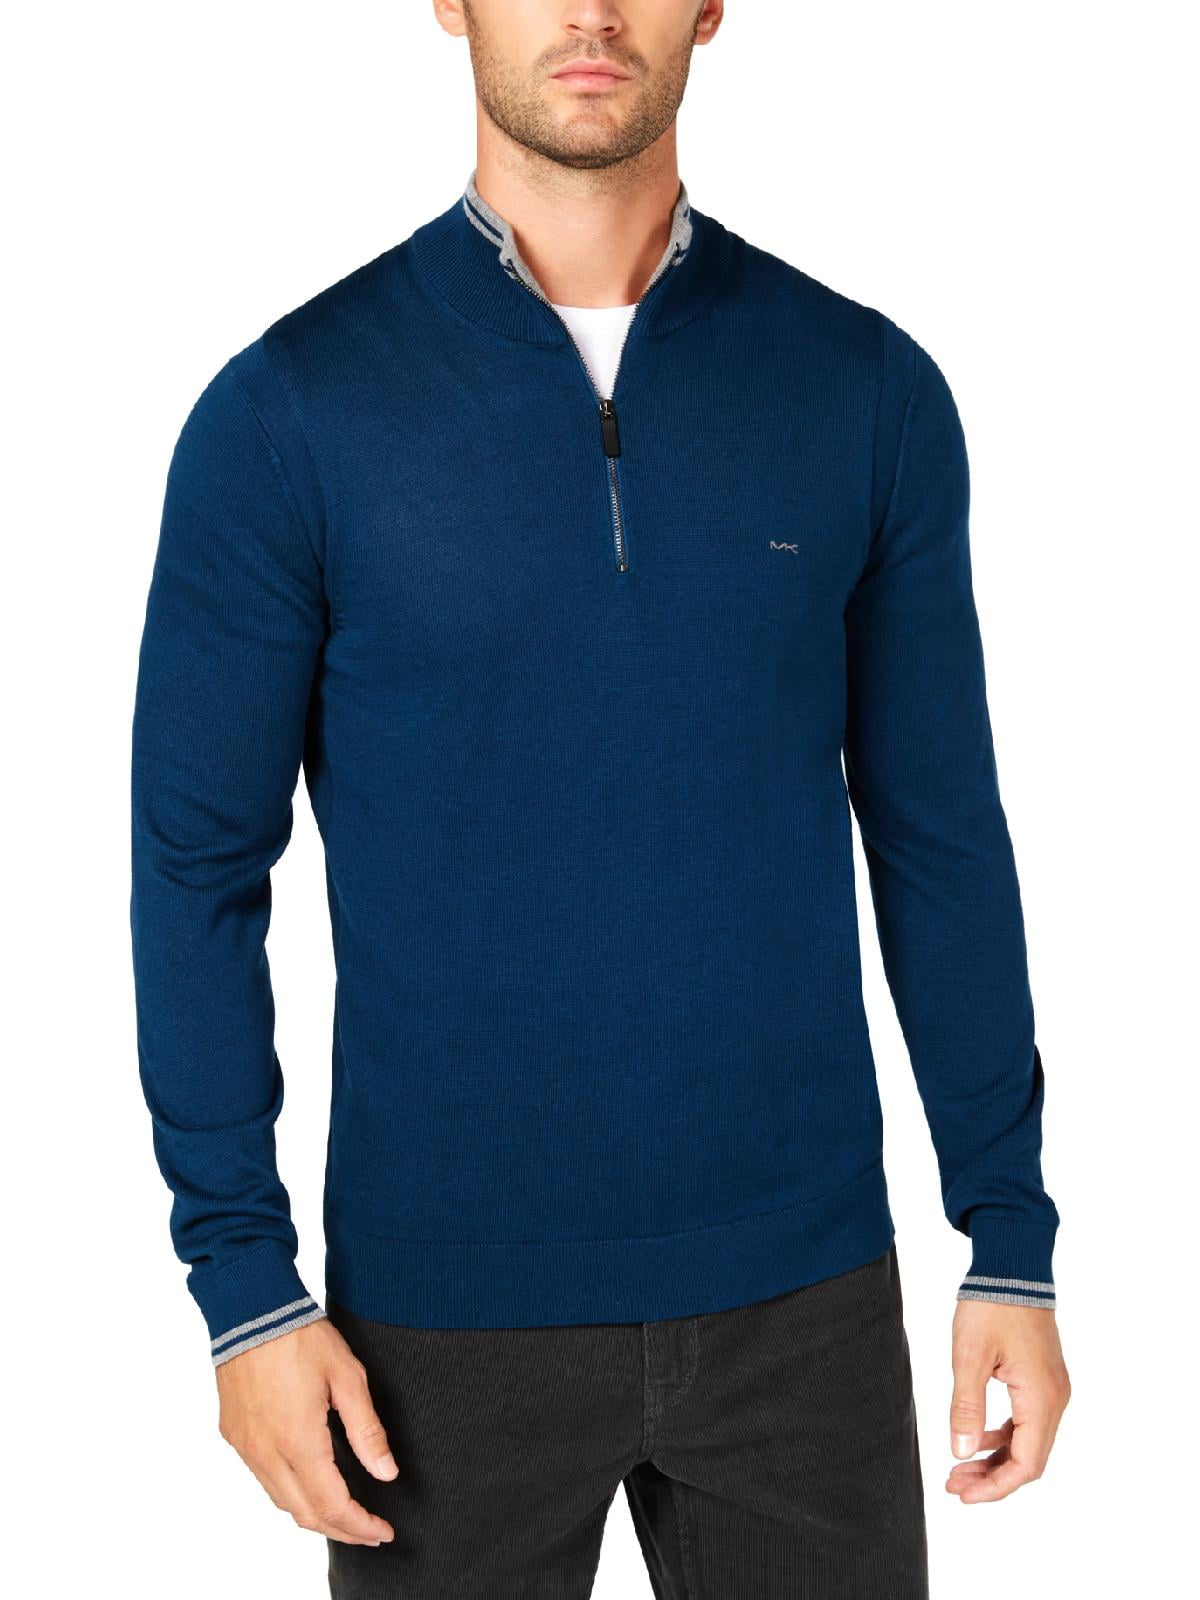 Michael Kors - Michael Kors Mens Striped 1/4 Zip Pullover Sweater ...